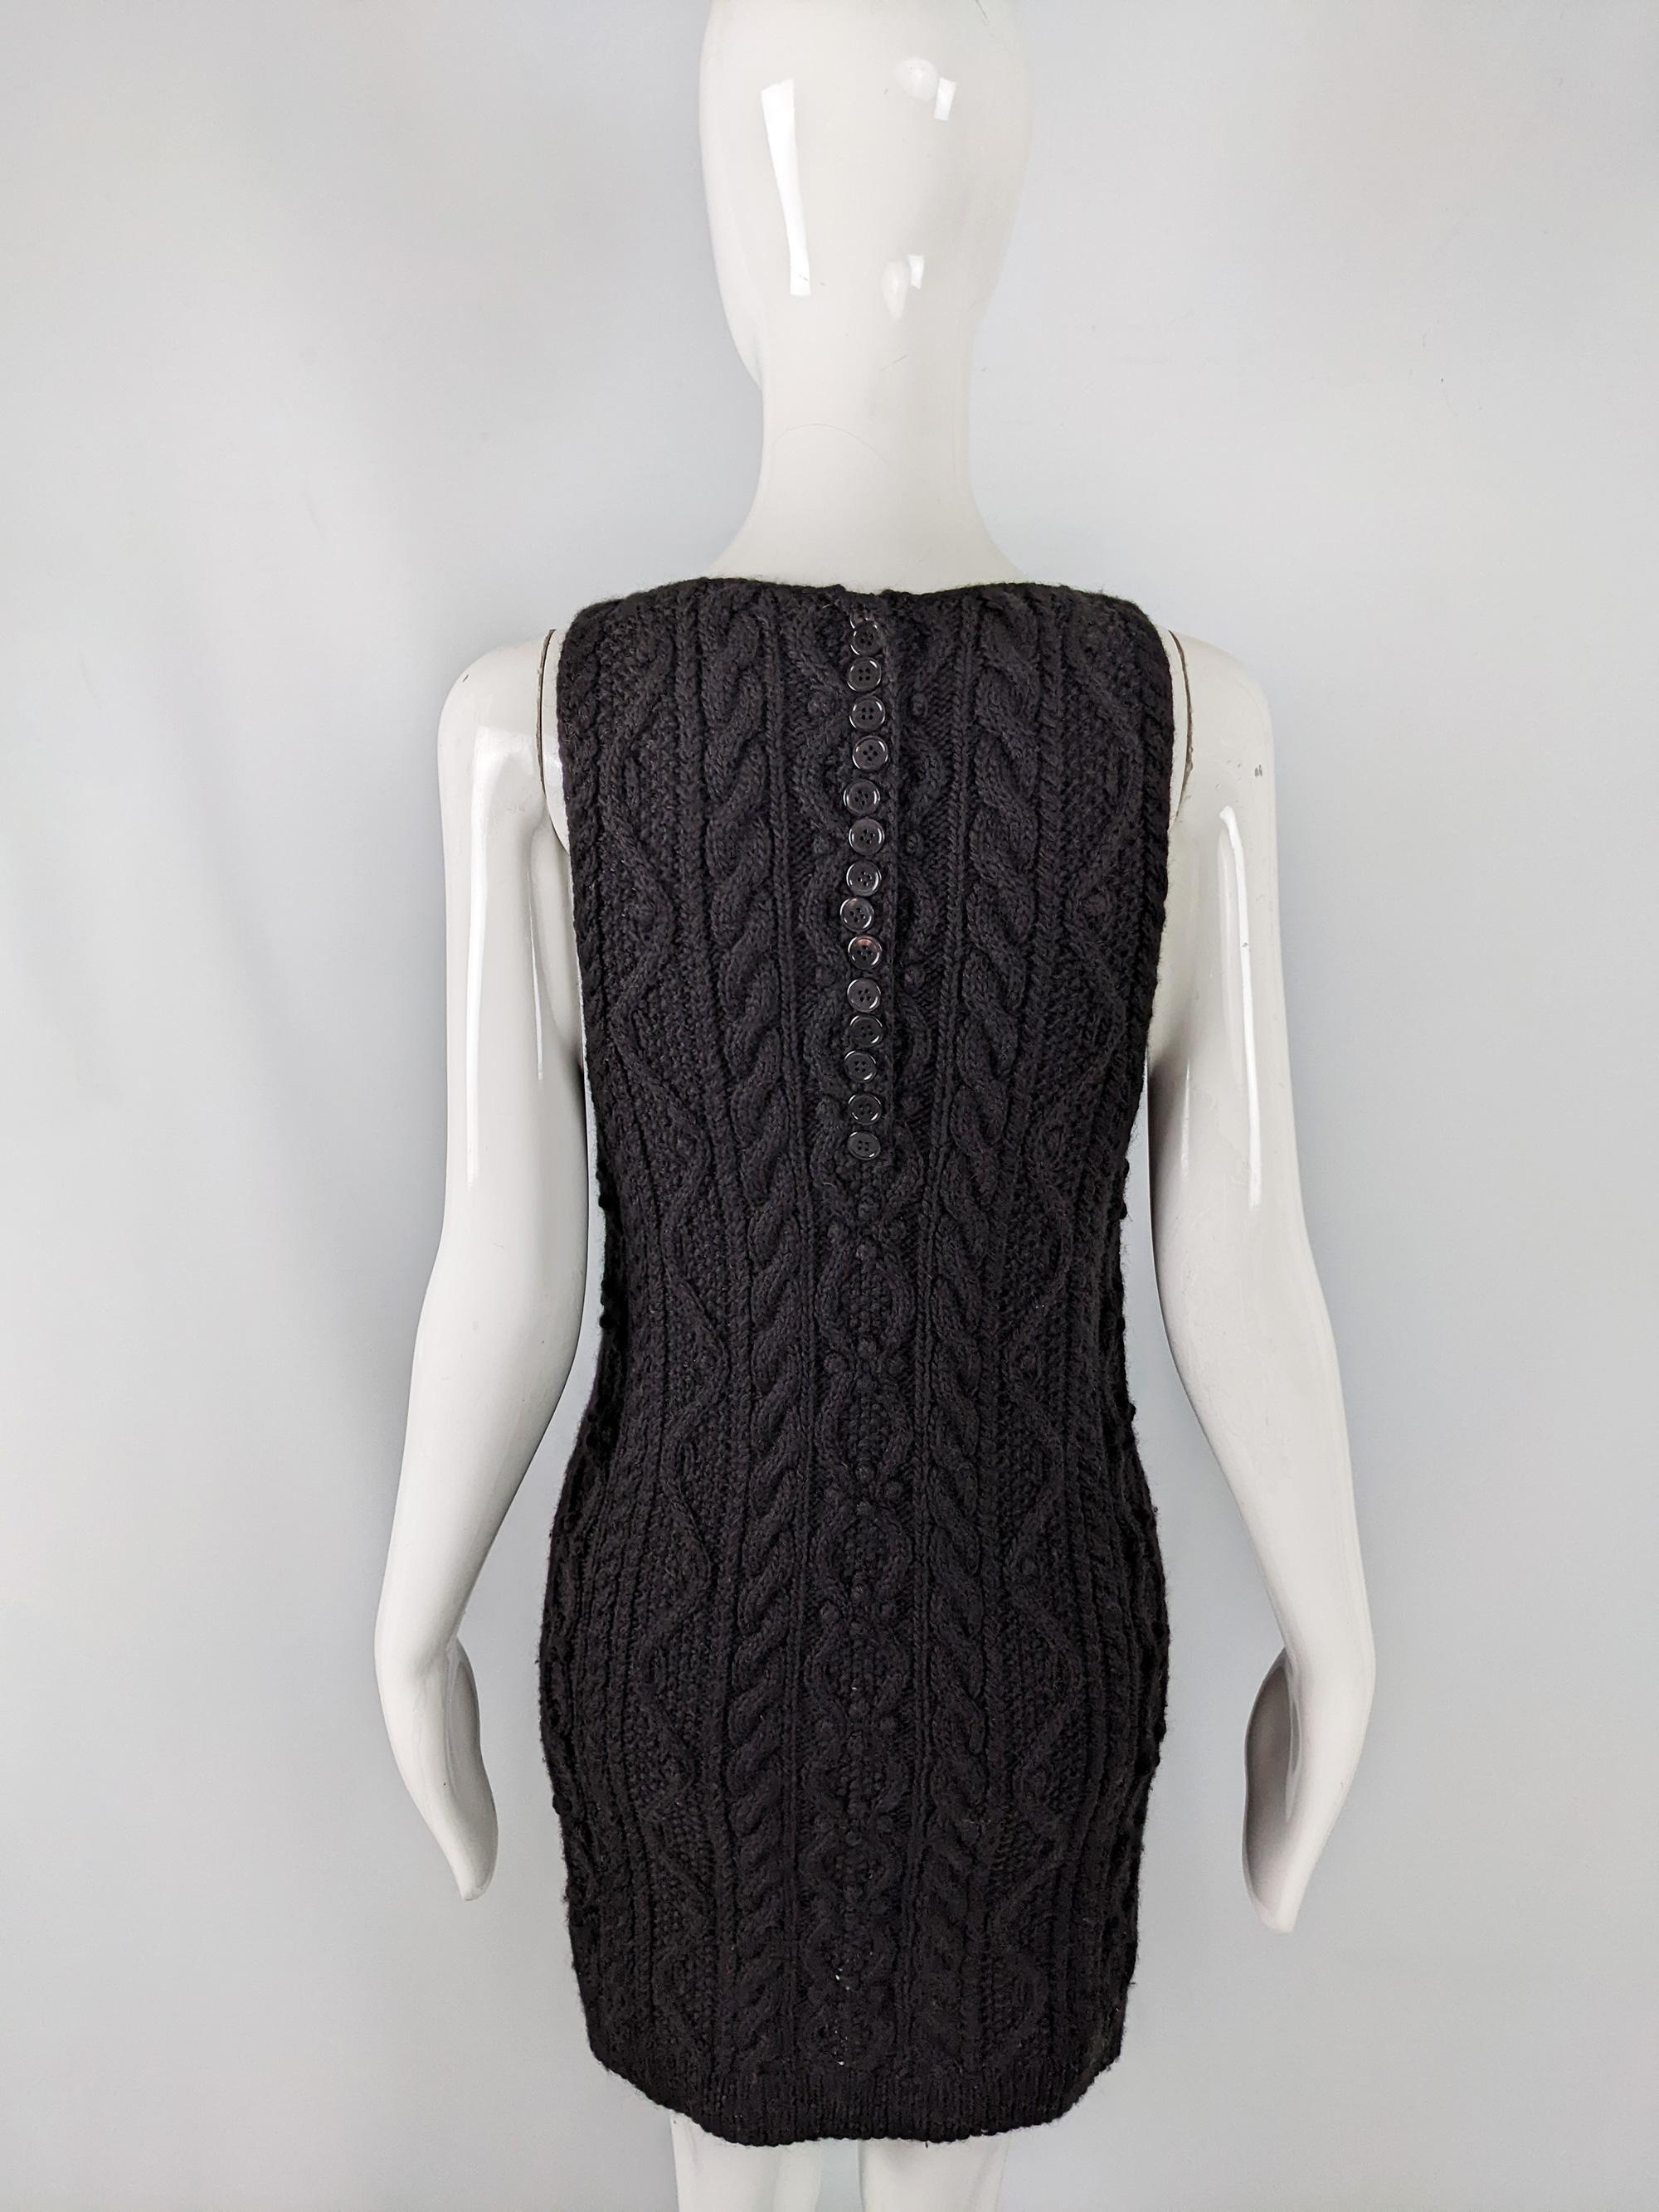 Women's Joseph Vintage Hand Knit Black Cable Knit Sweaterdress Pinafore Sweater Dress